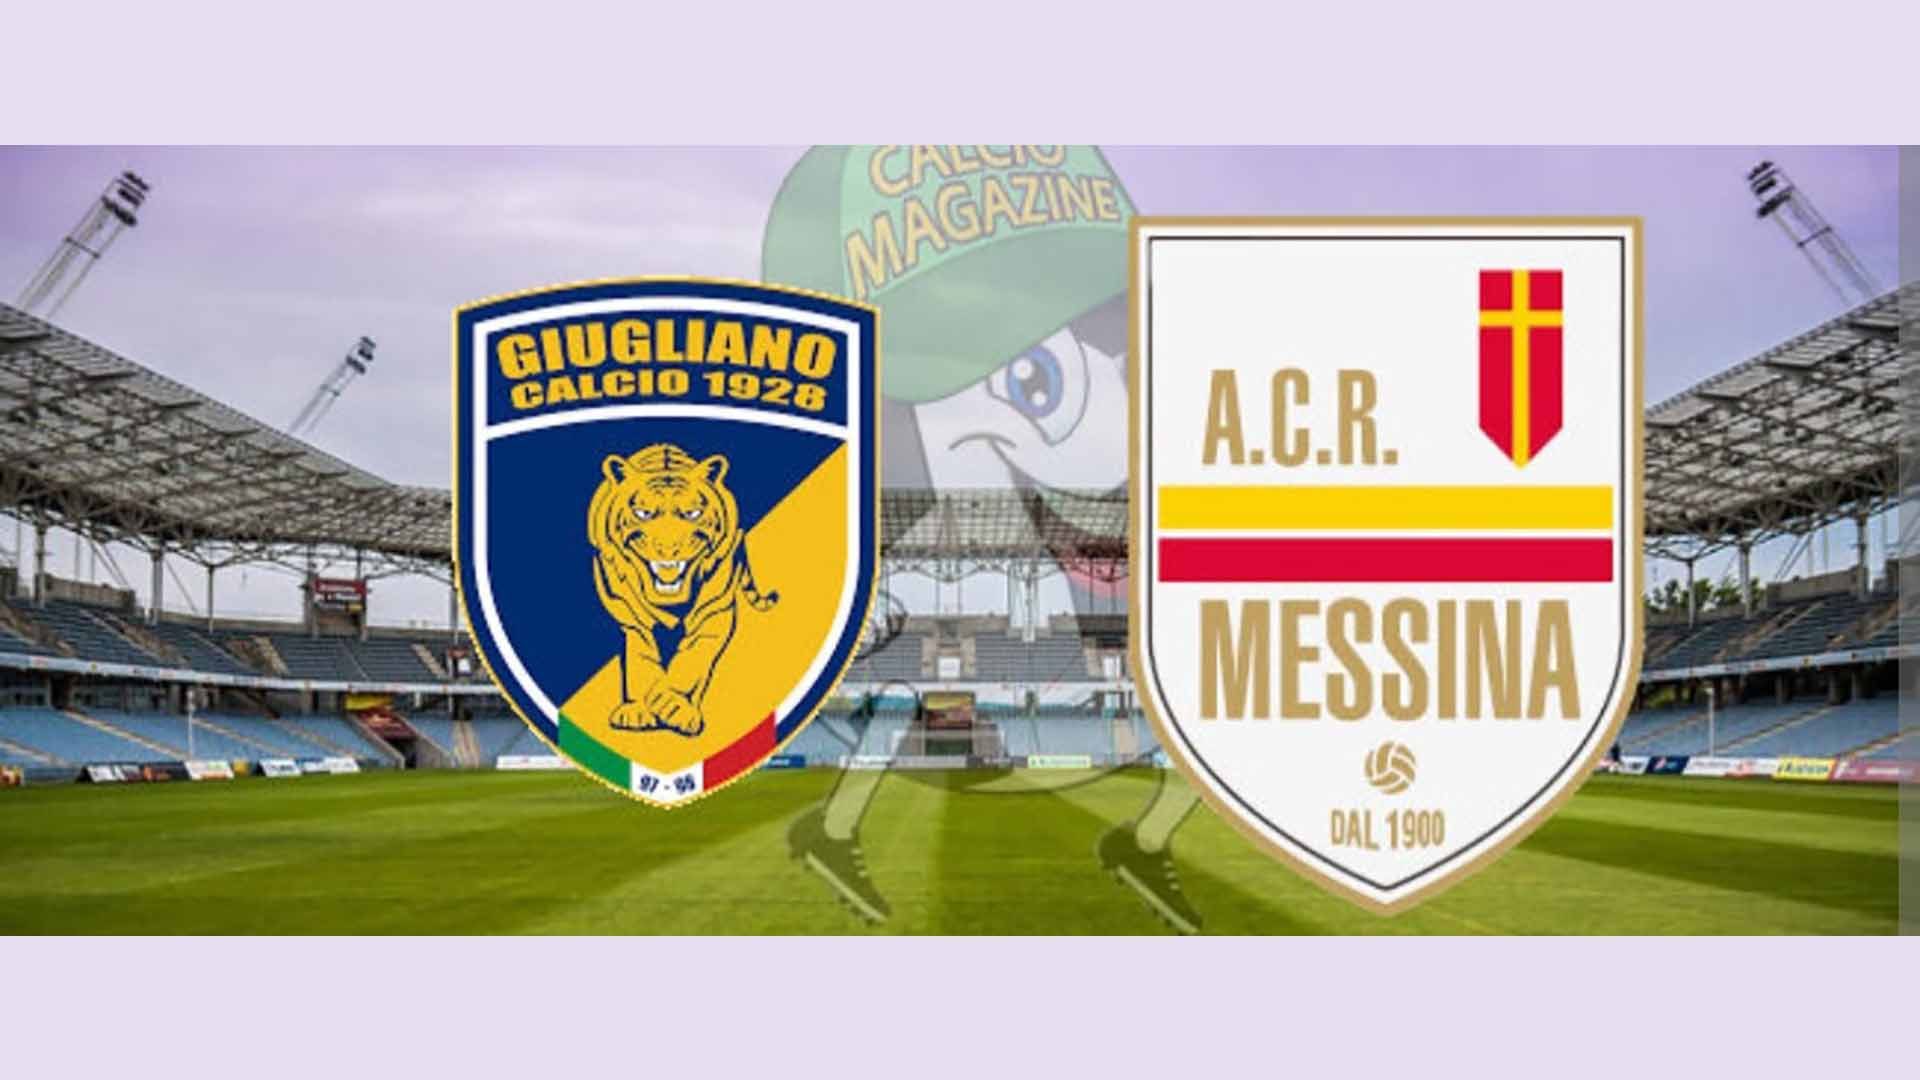 Acr Messina-Giugliano 2-2_MessinaWebTv_Sport